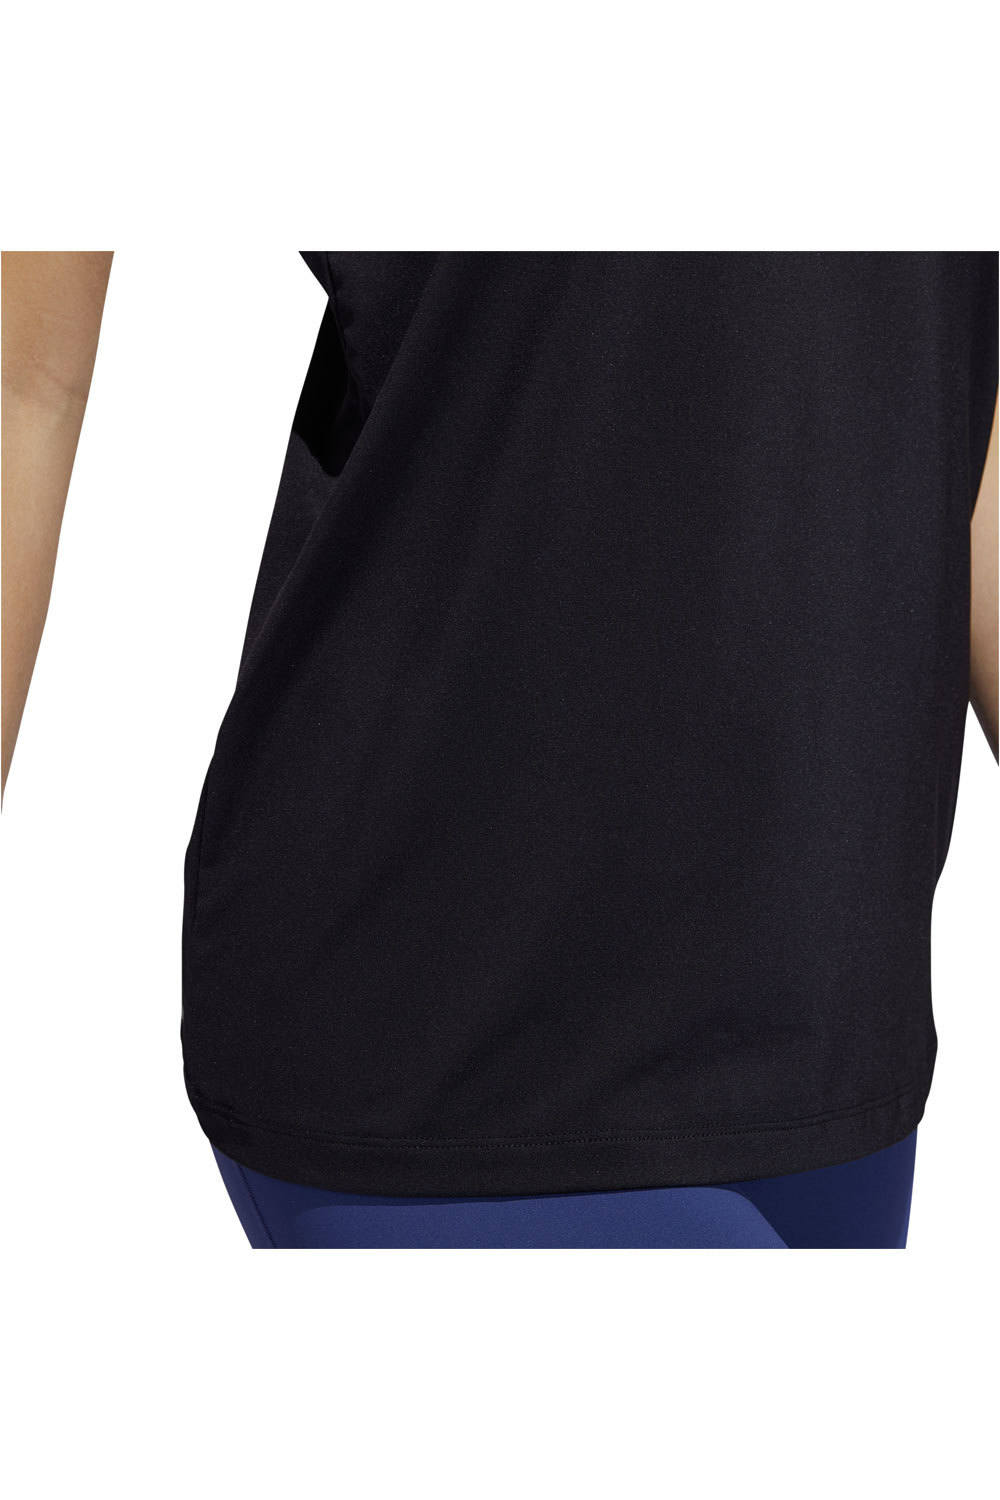 adidas camiseta tirantes fitness mujer W TECH BOS TK 03